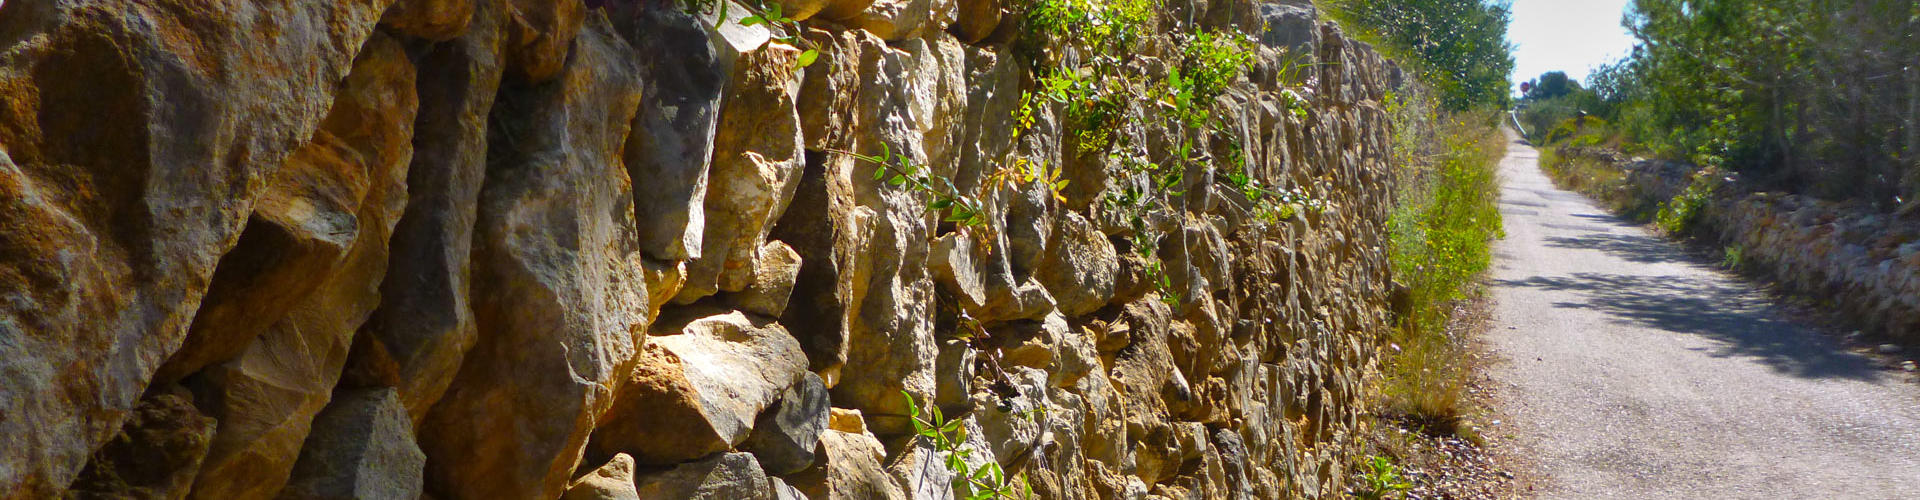 murs de pedra seca Torredembarra